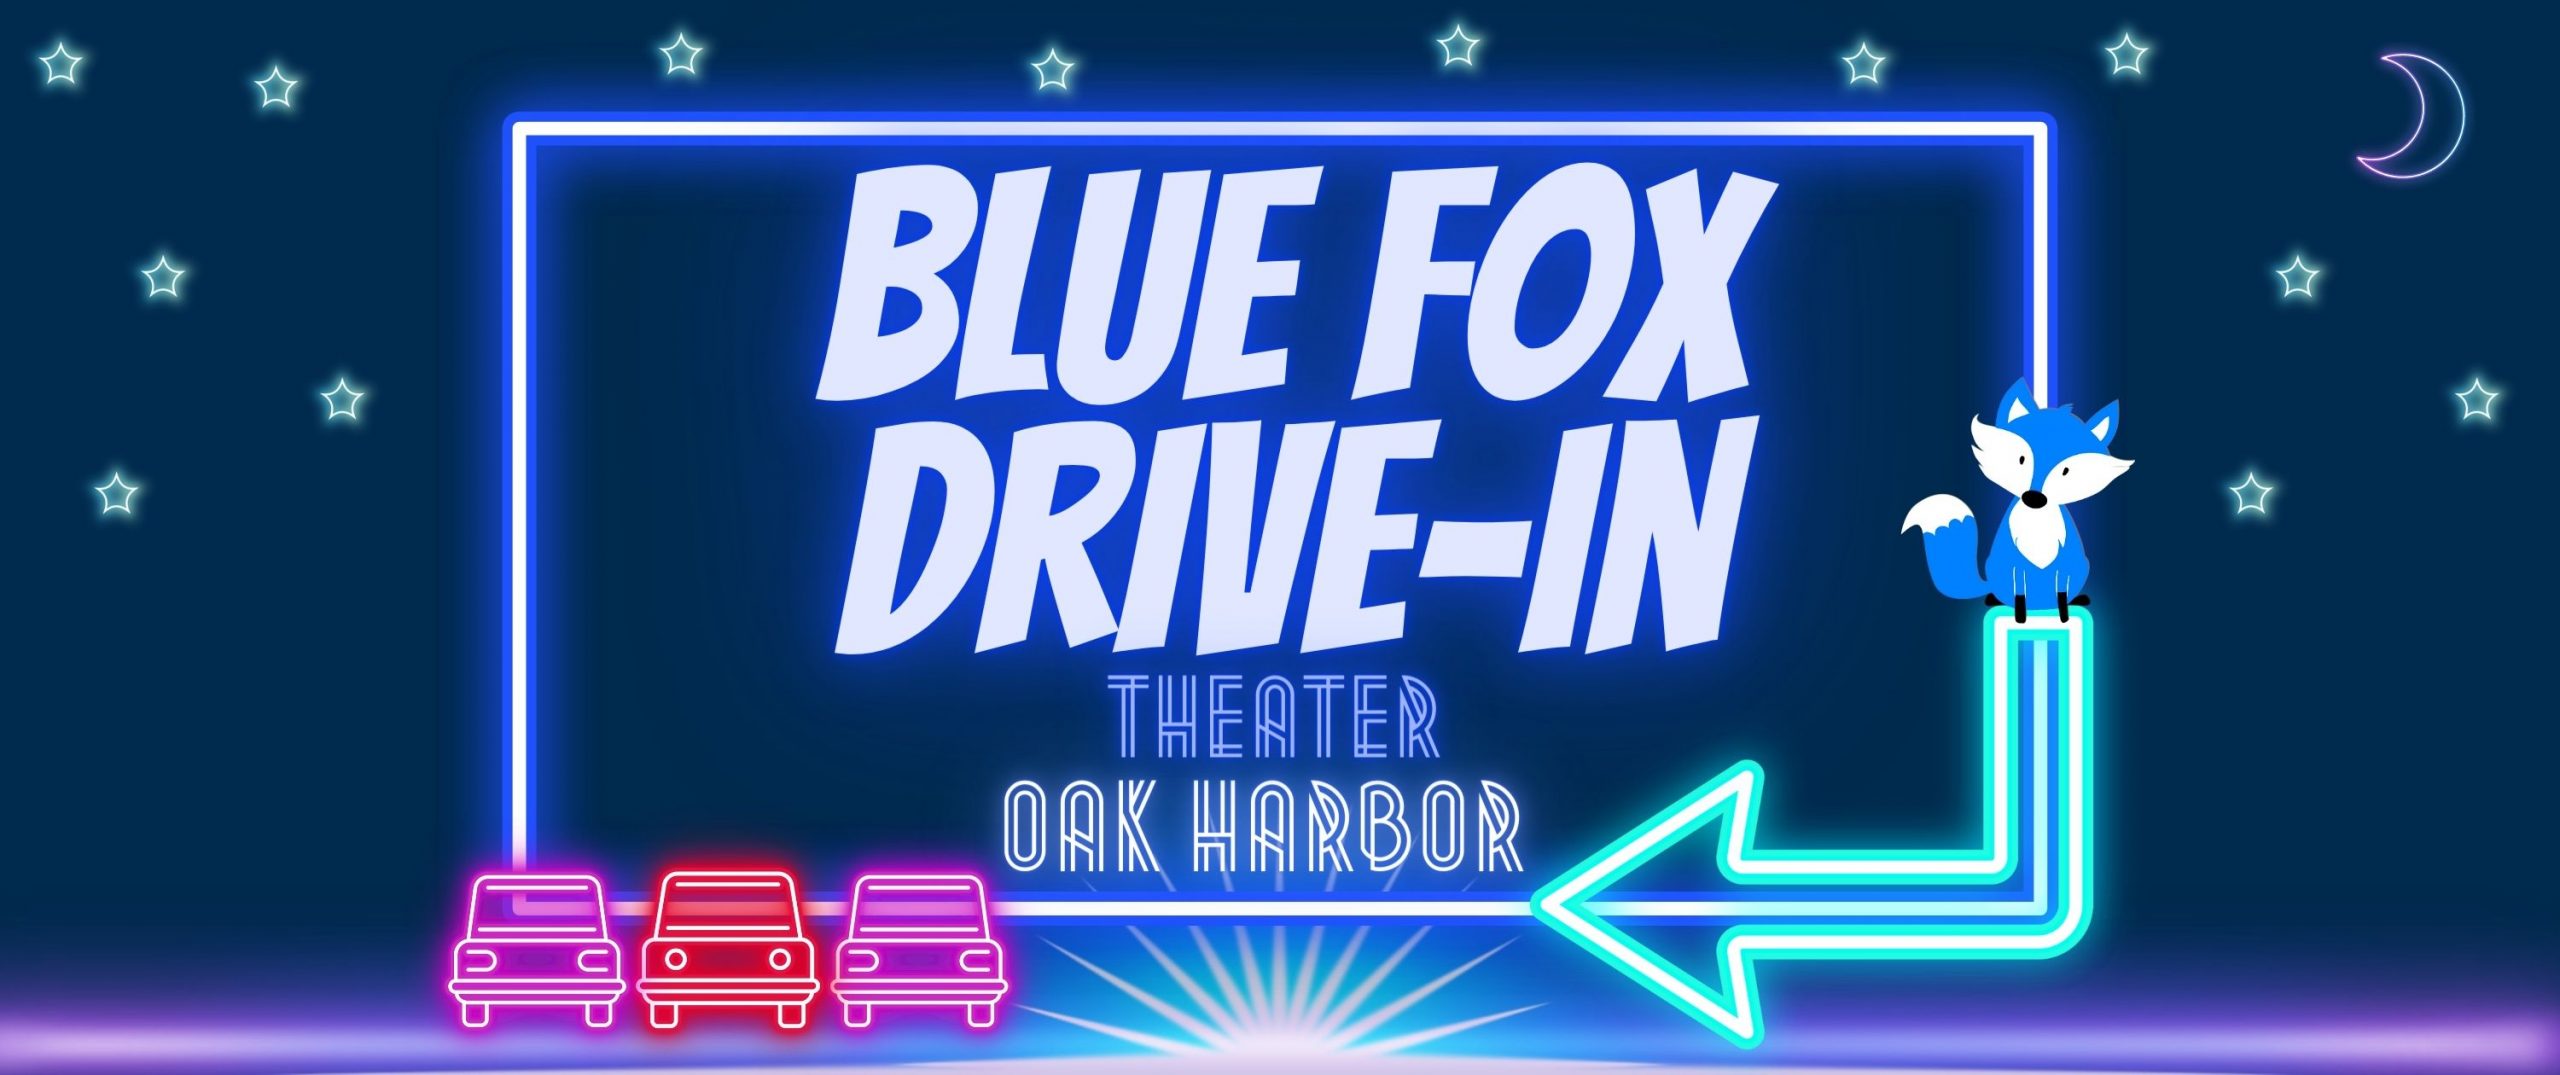 Blue Fox Drive-in Theater Windermere Mill Creek